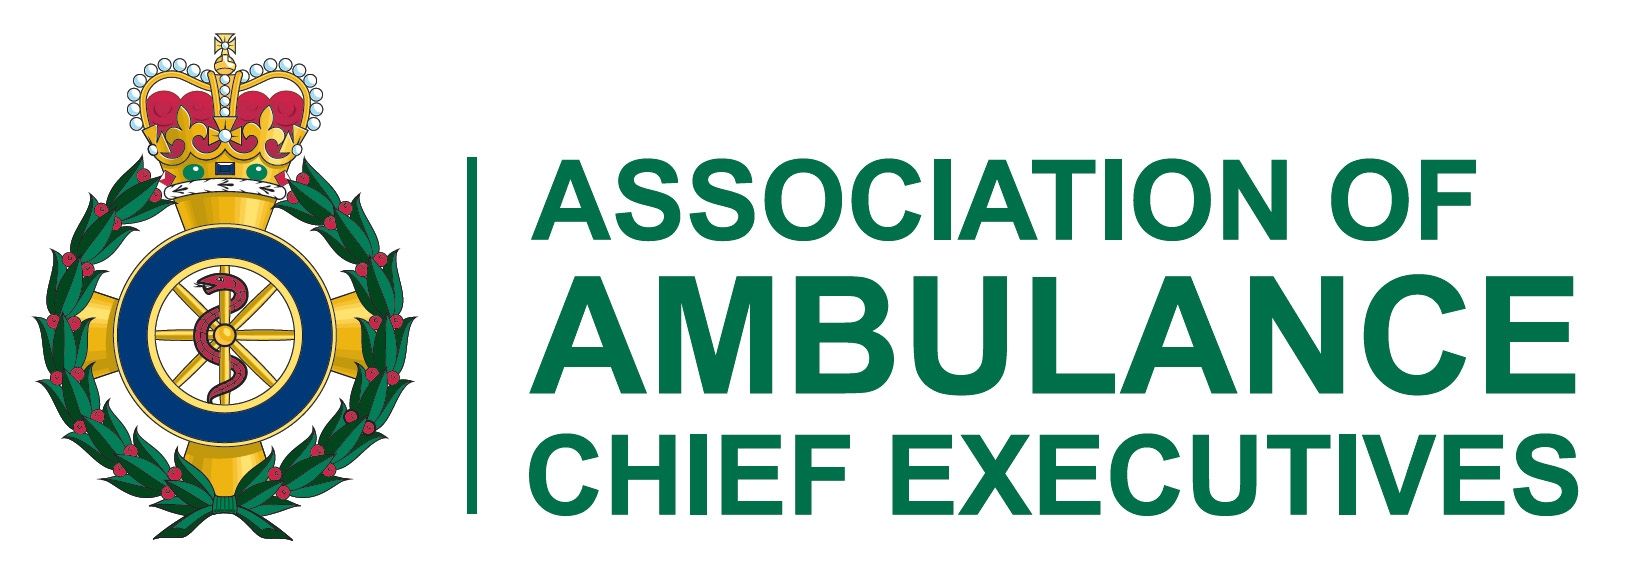 Association of Ambulance Chief Executives